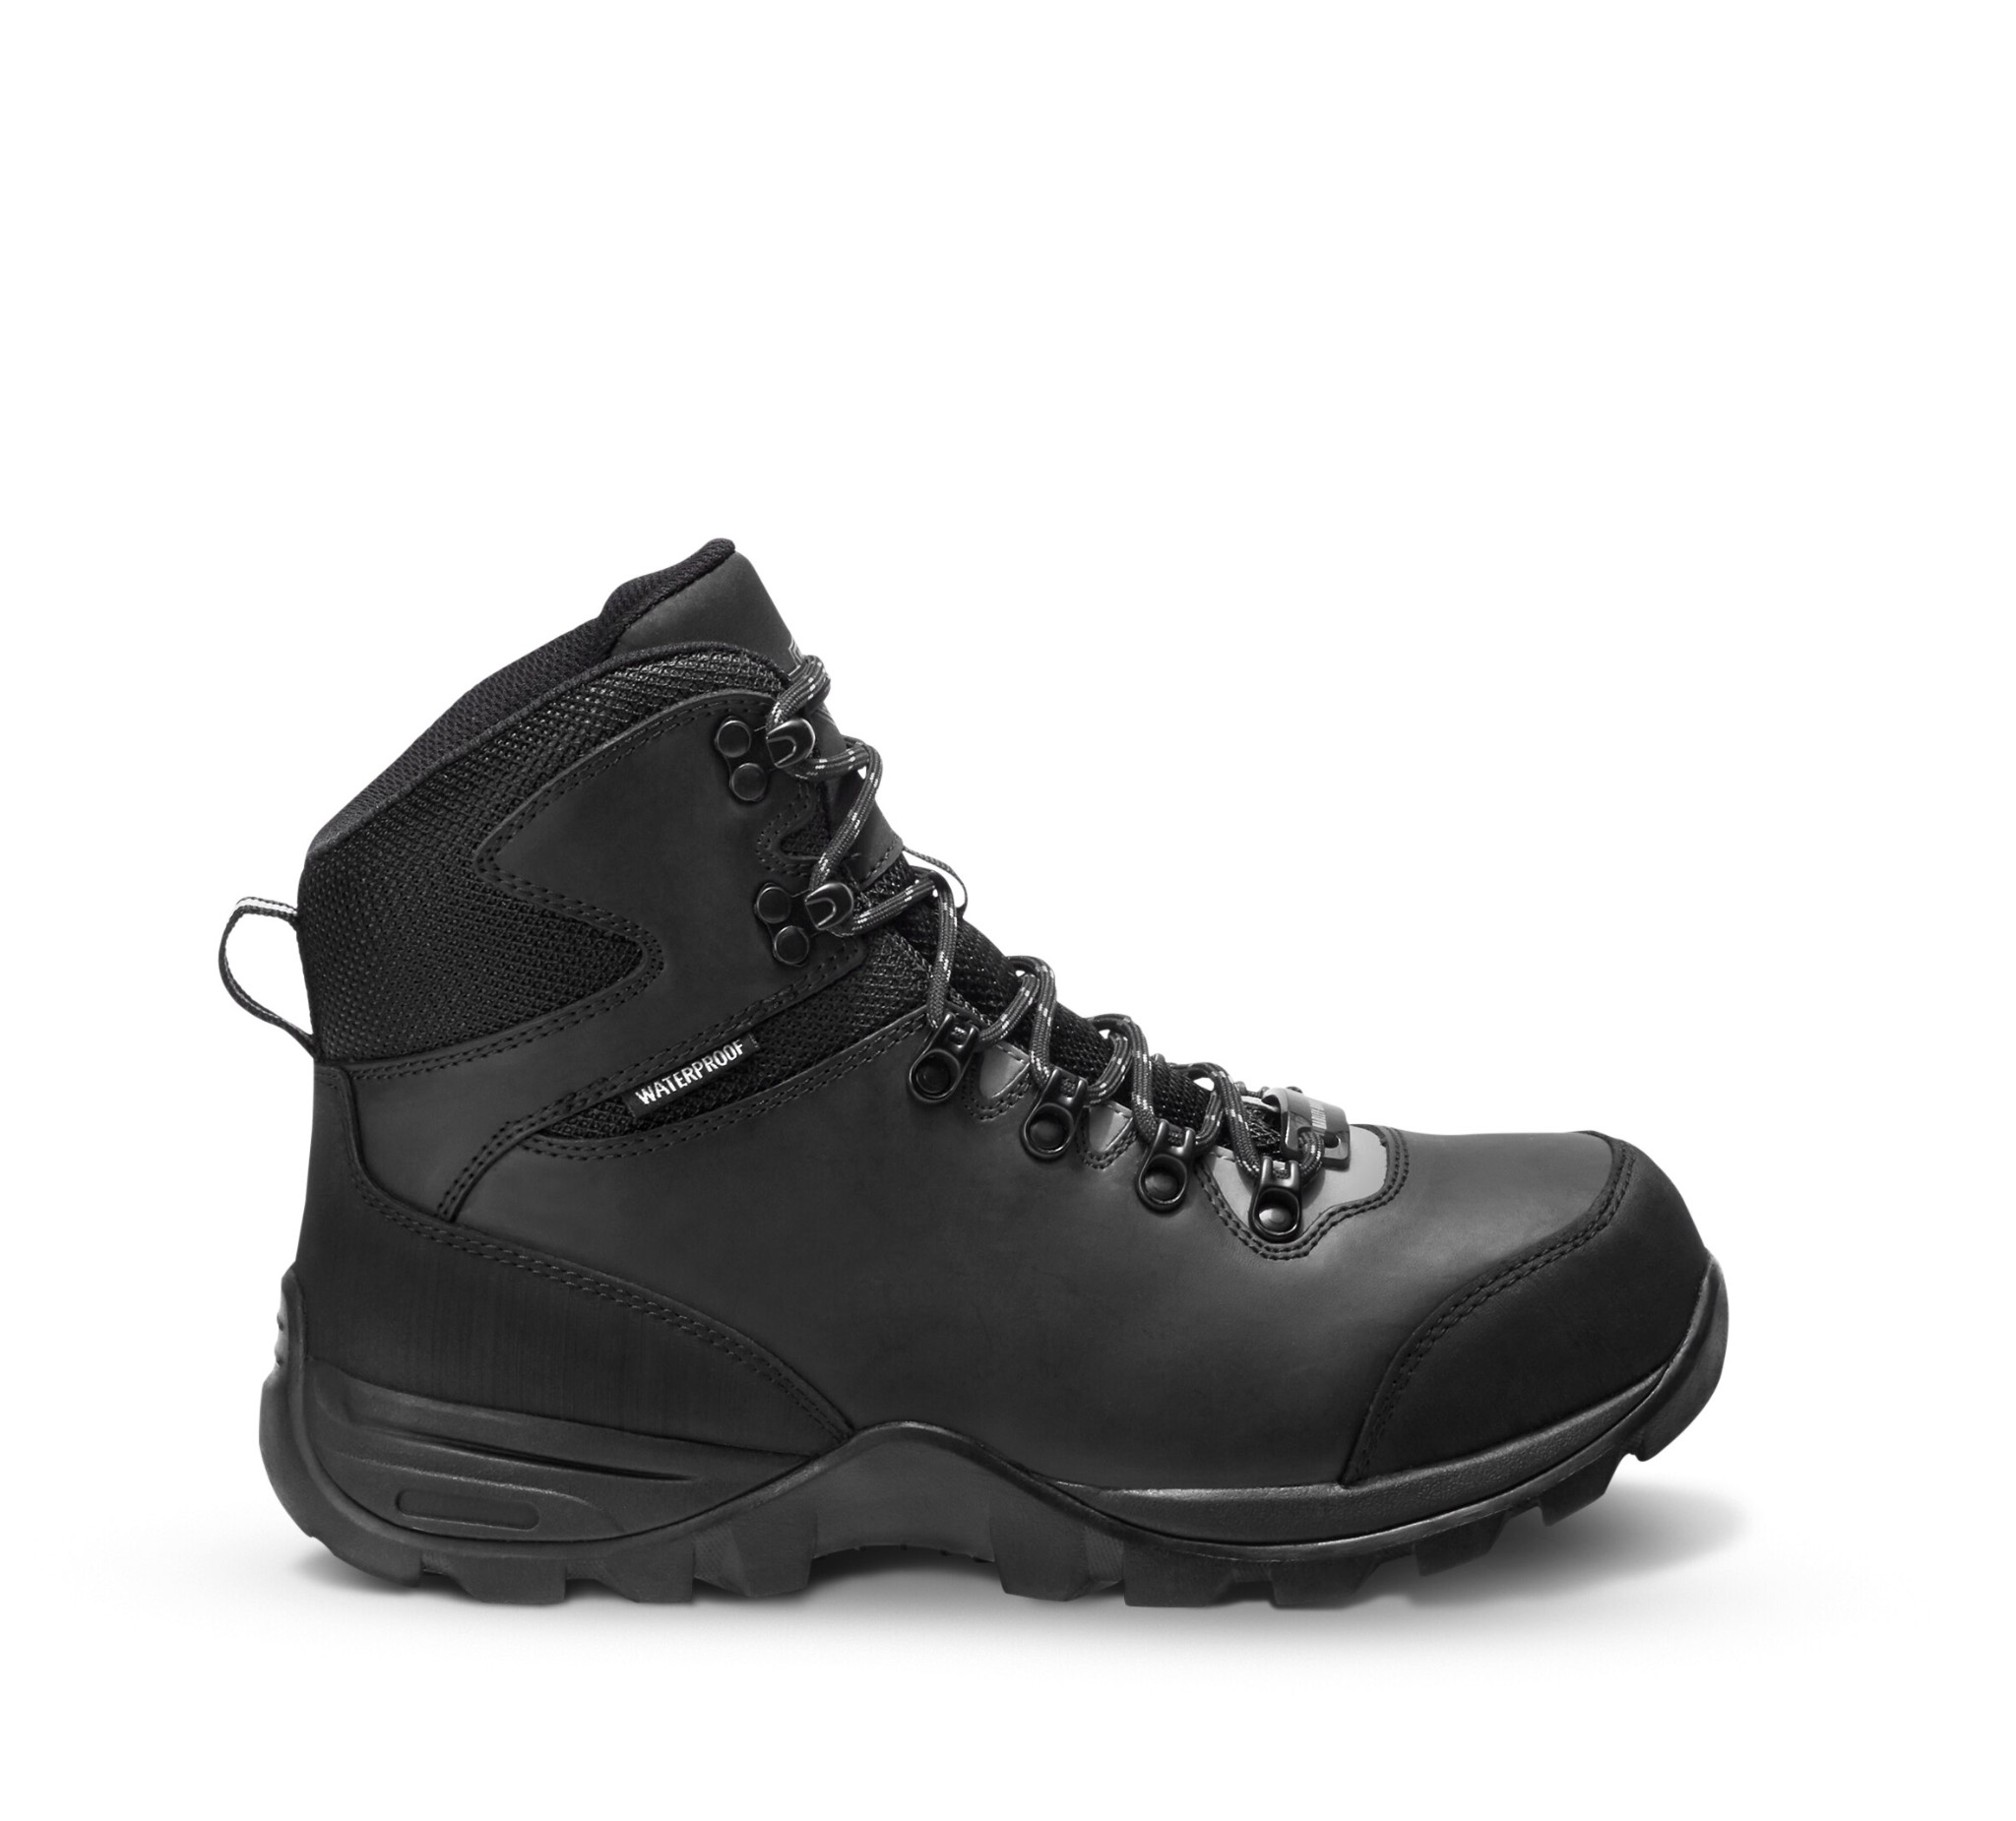 Men's Benham Waterproof Casual Boots - Black/Grey | Harley-Davidson USA